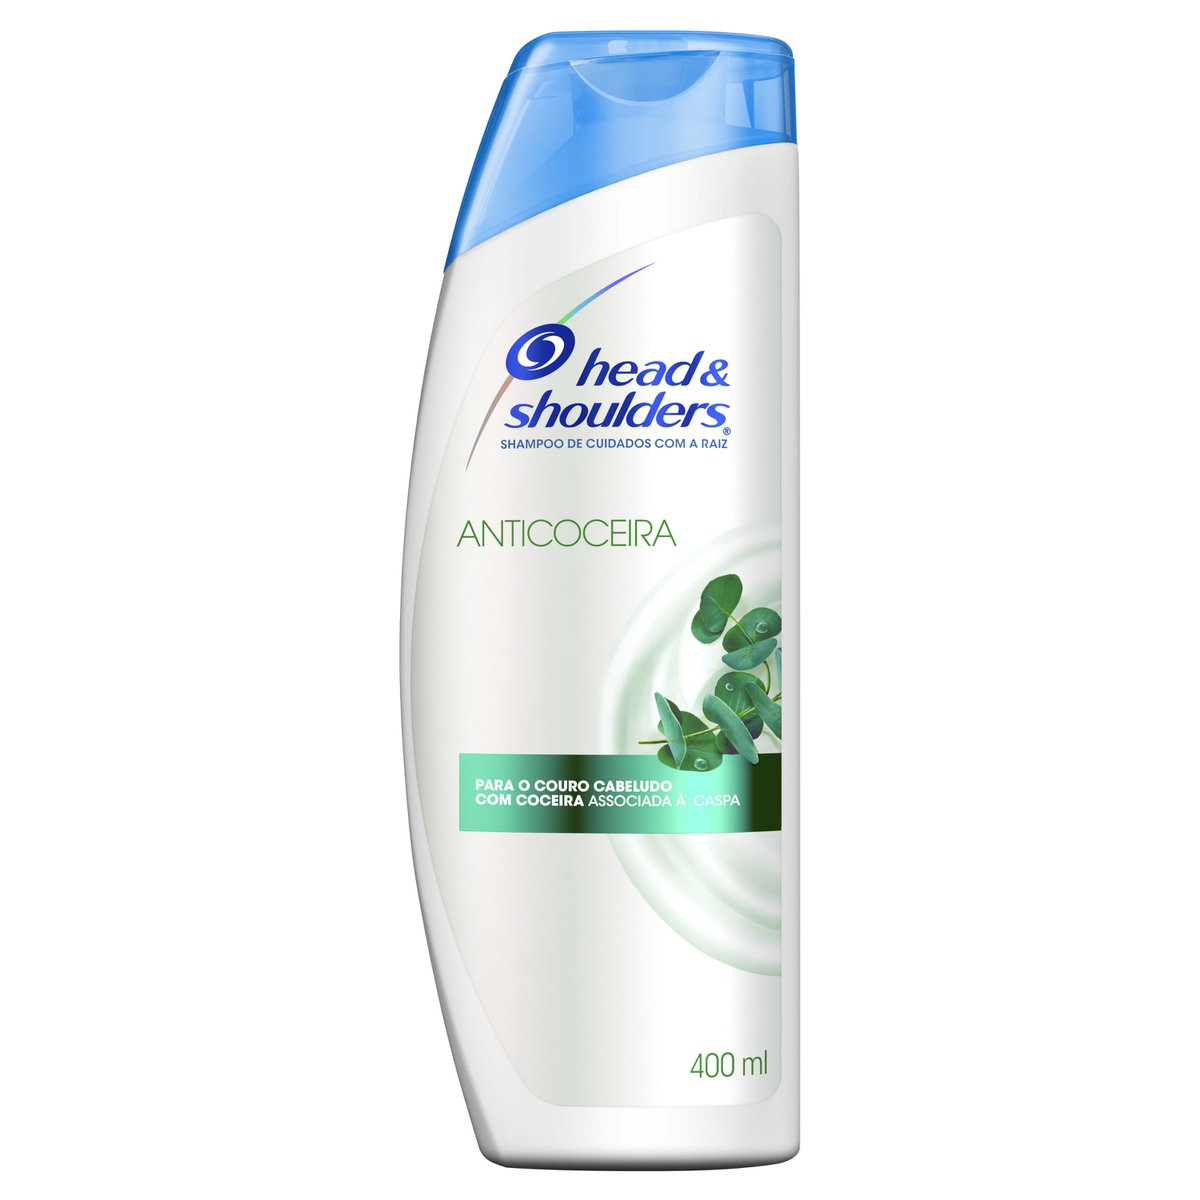 shampoo-de-cuidados-com-a-raiz-head-&-shoulders-anticoceira-400ml-1.jpg